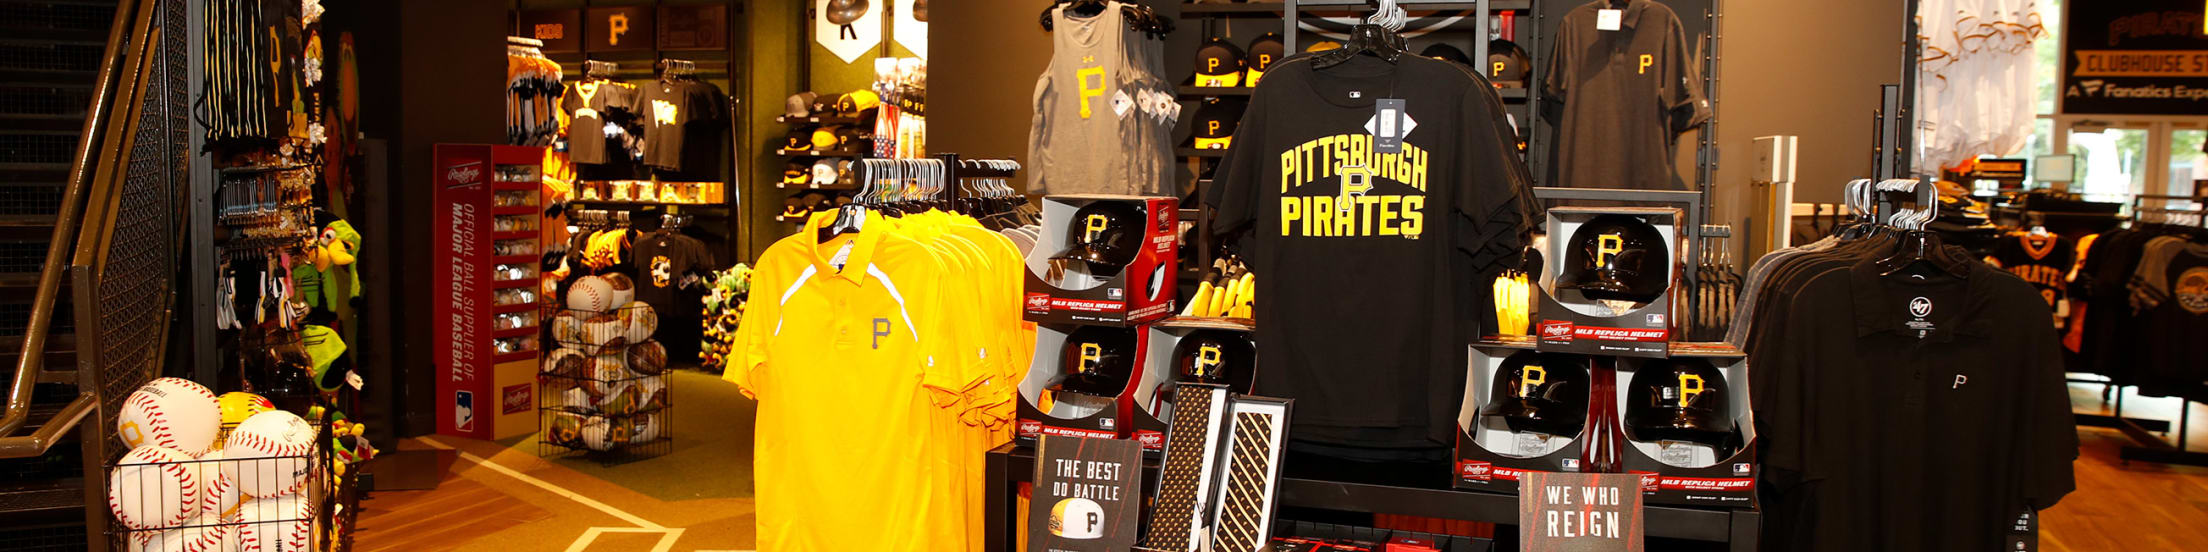 pittsburgh pirates fan gear